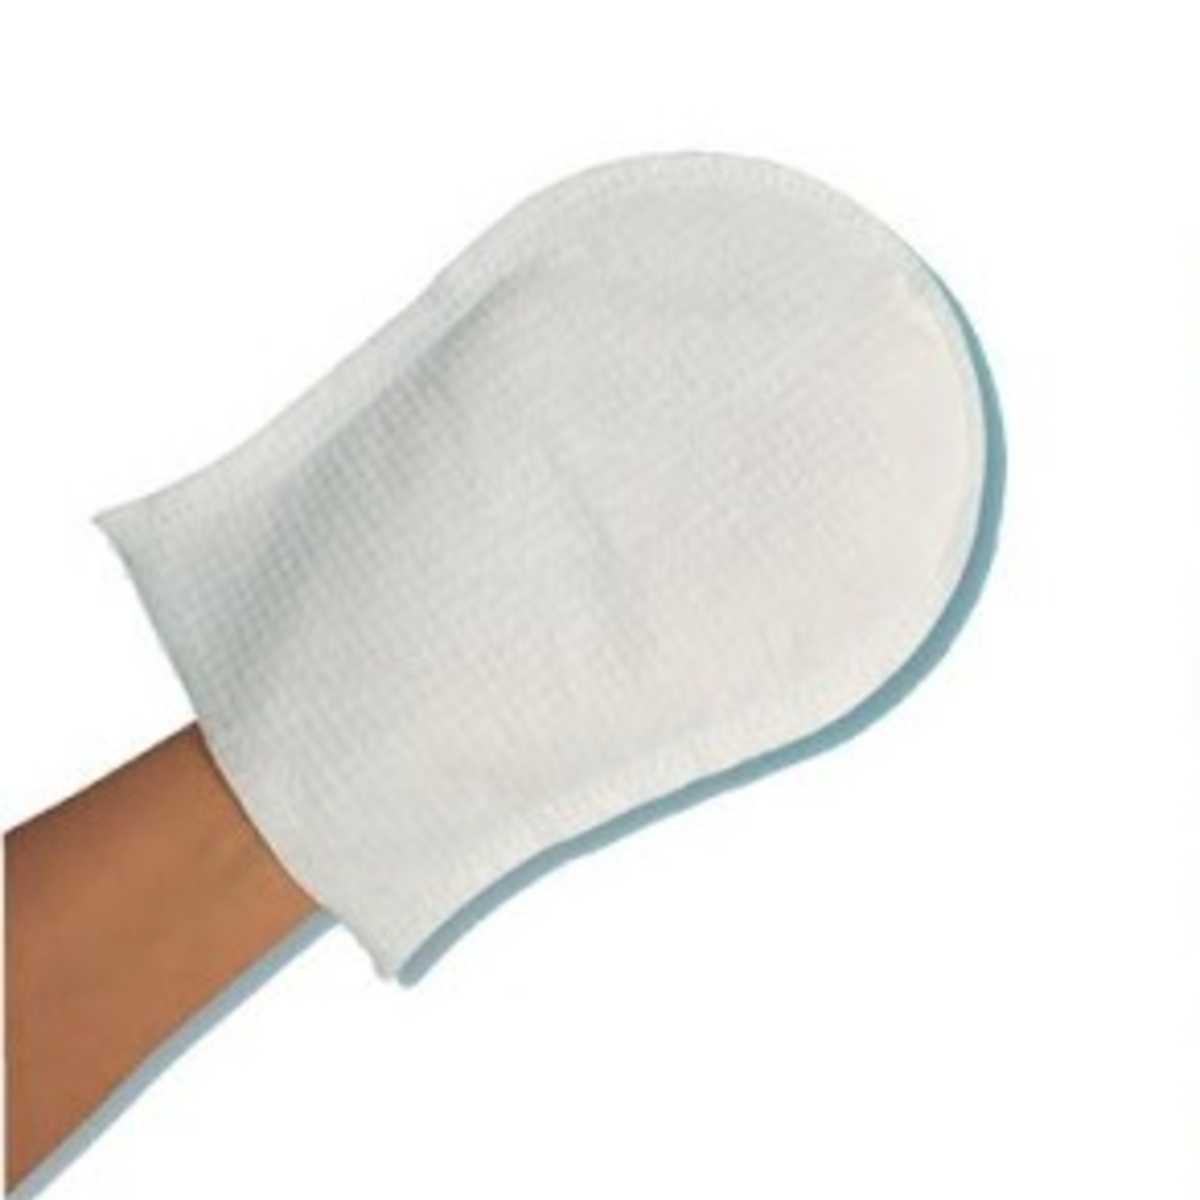 Disposable Wash Gloves, White